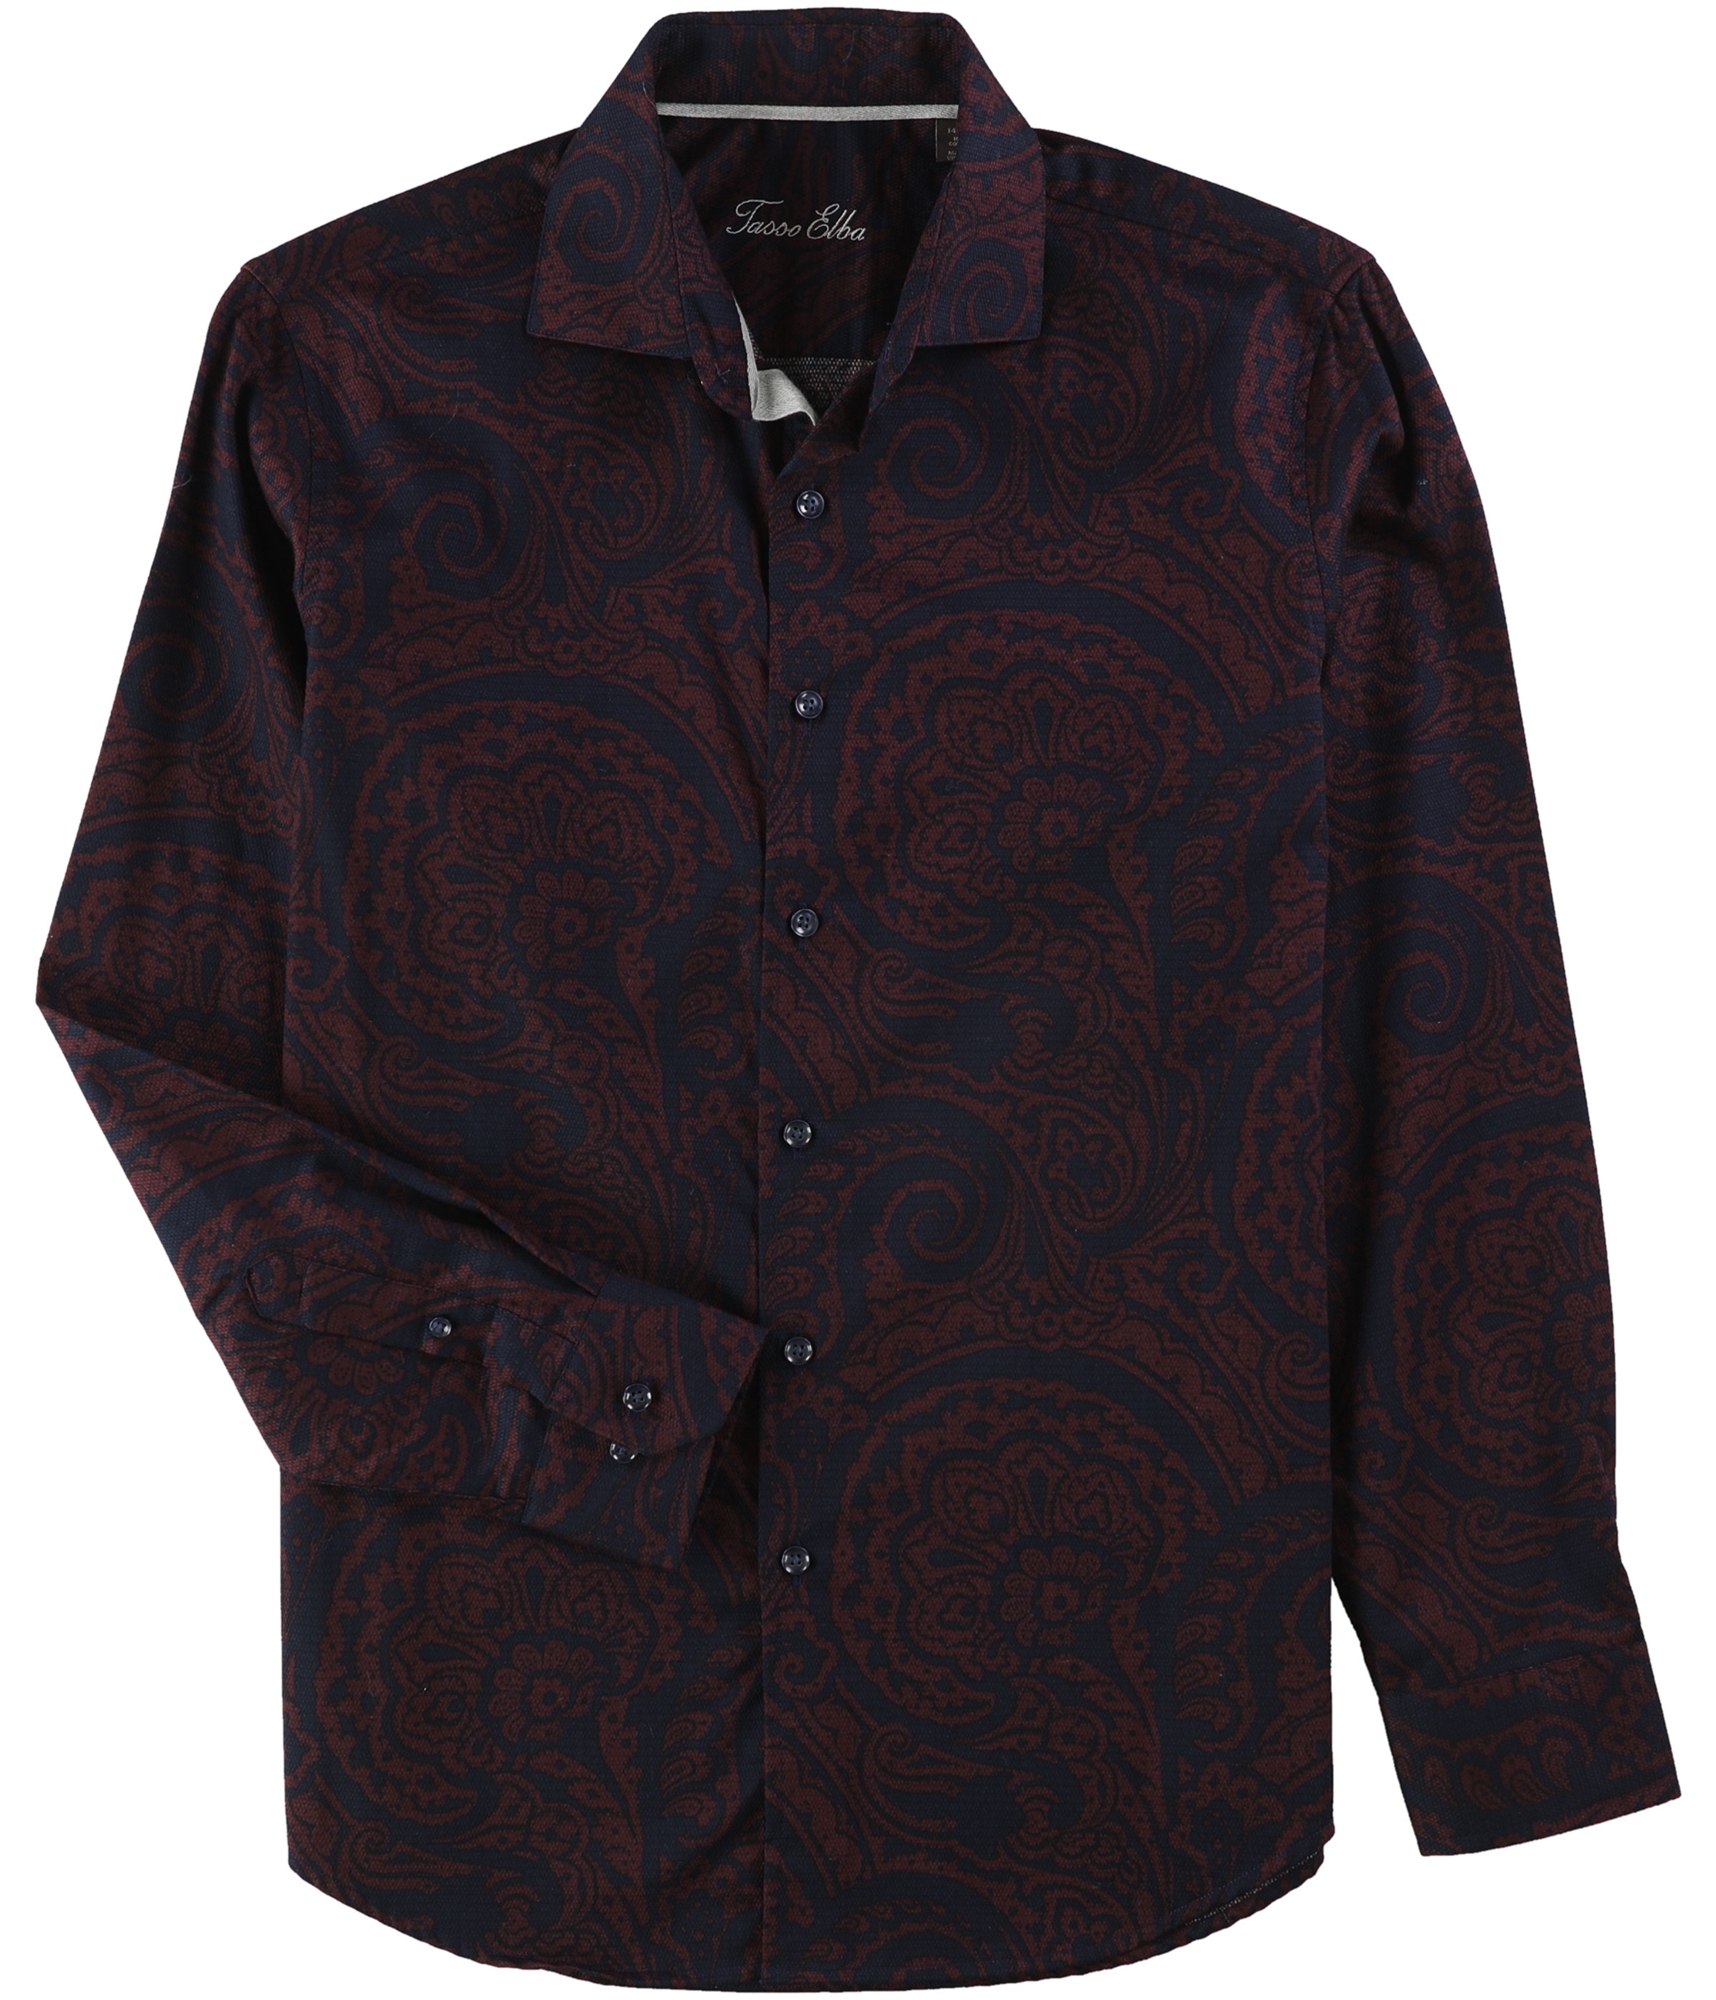 Tasso Elba Mens Paisley Button Up Shirt, Red, Small | eBay